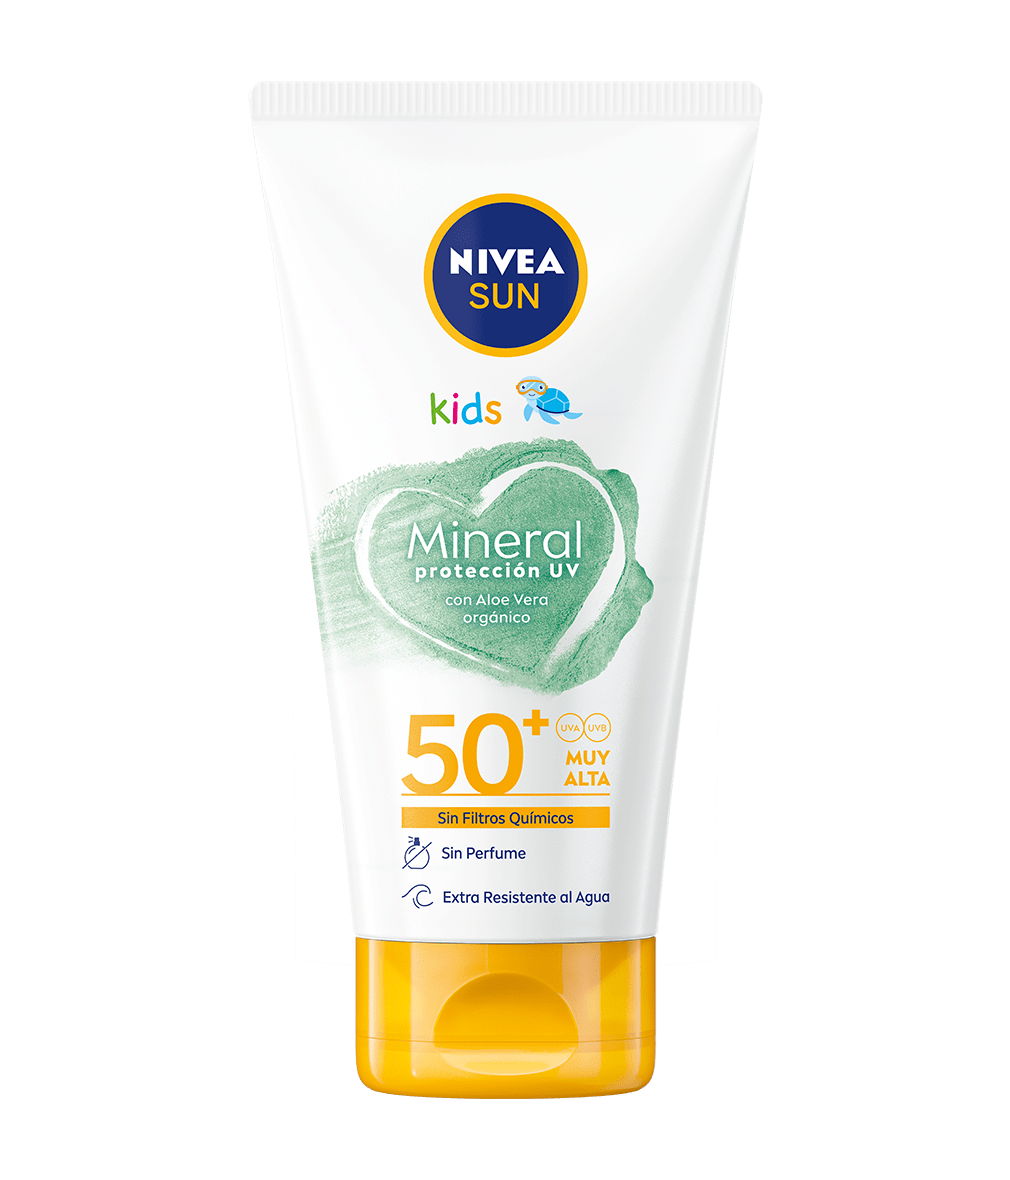 KIDS Mineral Protección UV Crema Solar FP 50+ | NIVEA SUN